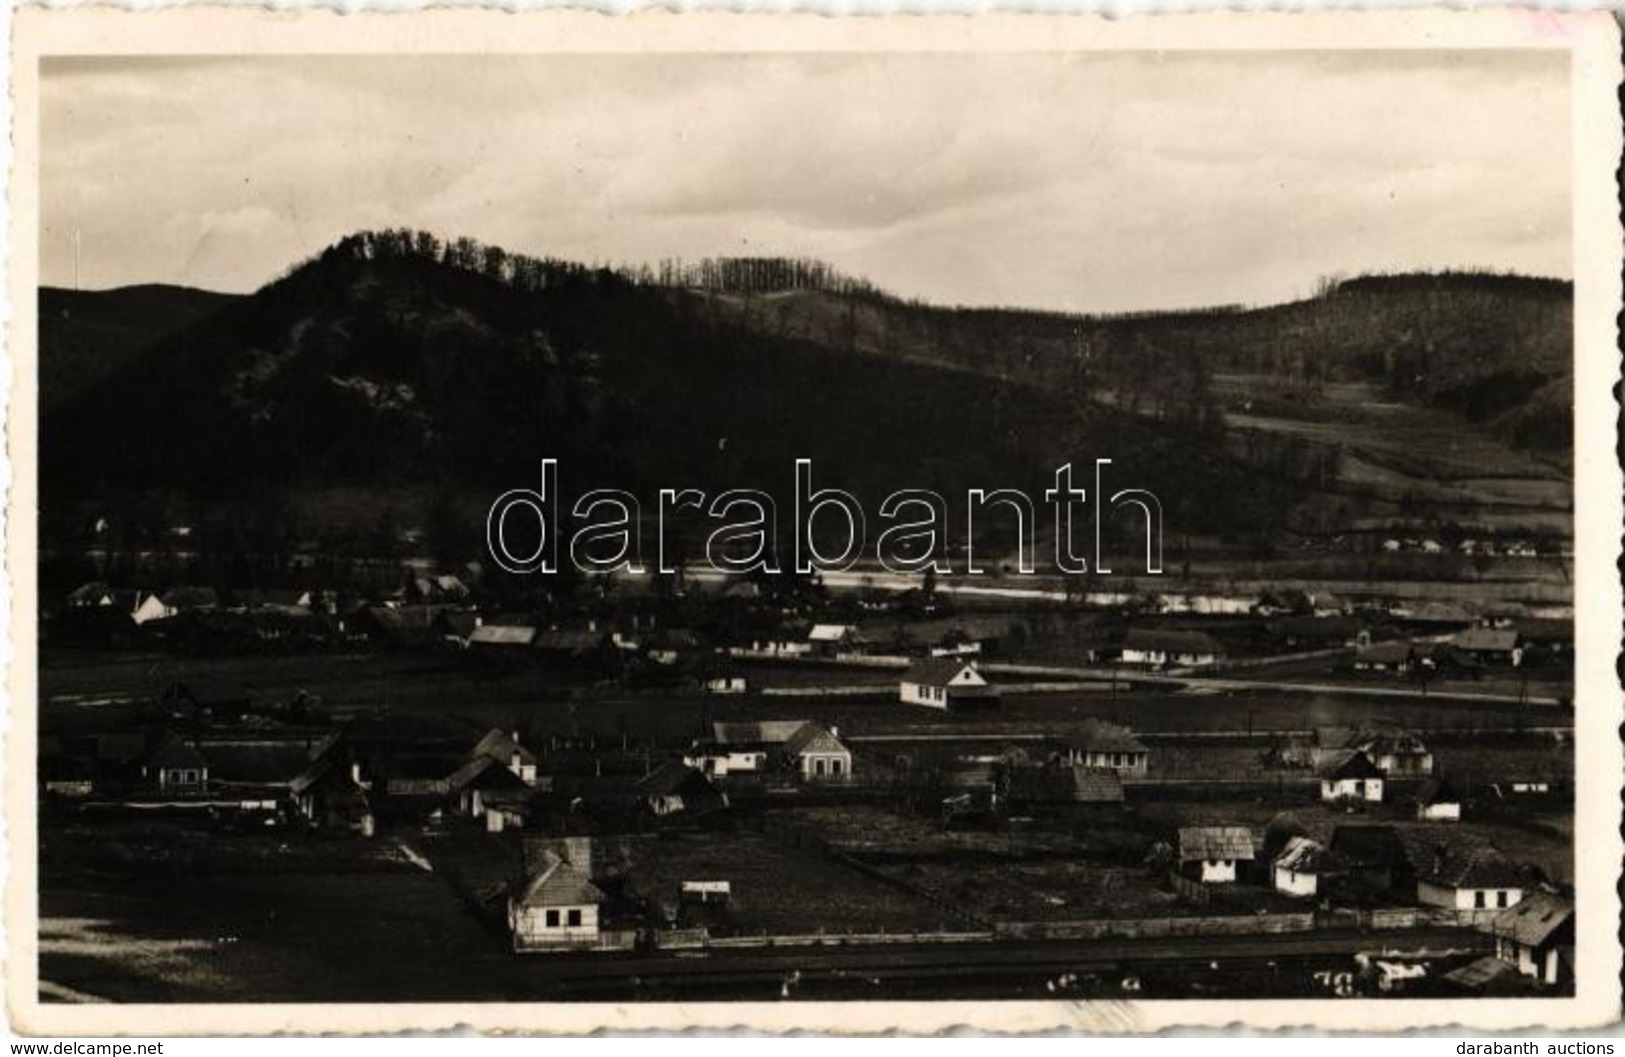 * T2 1944 Bethlen, Beclean; Látkép A Beke Heggyel / General View With Mountain - Unclassified